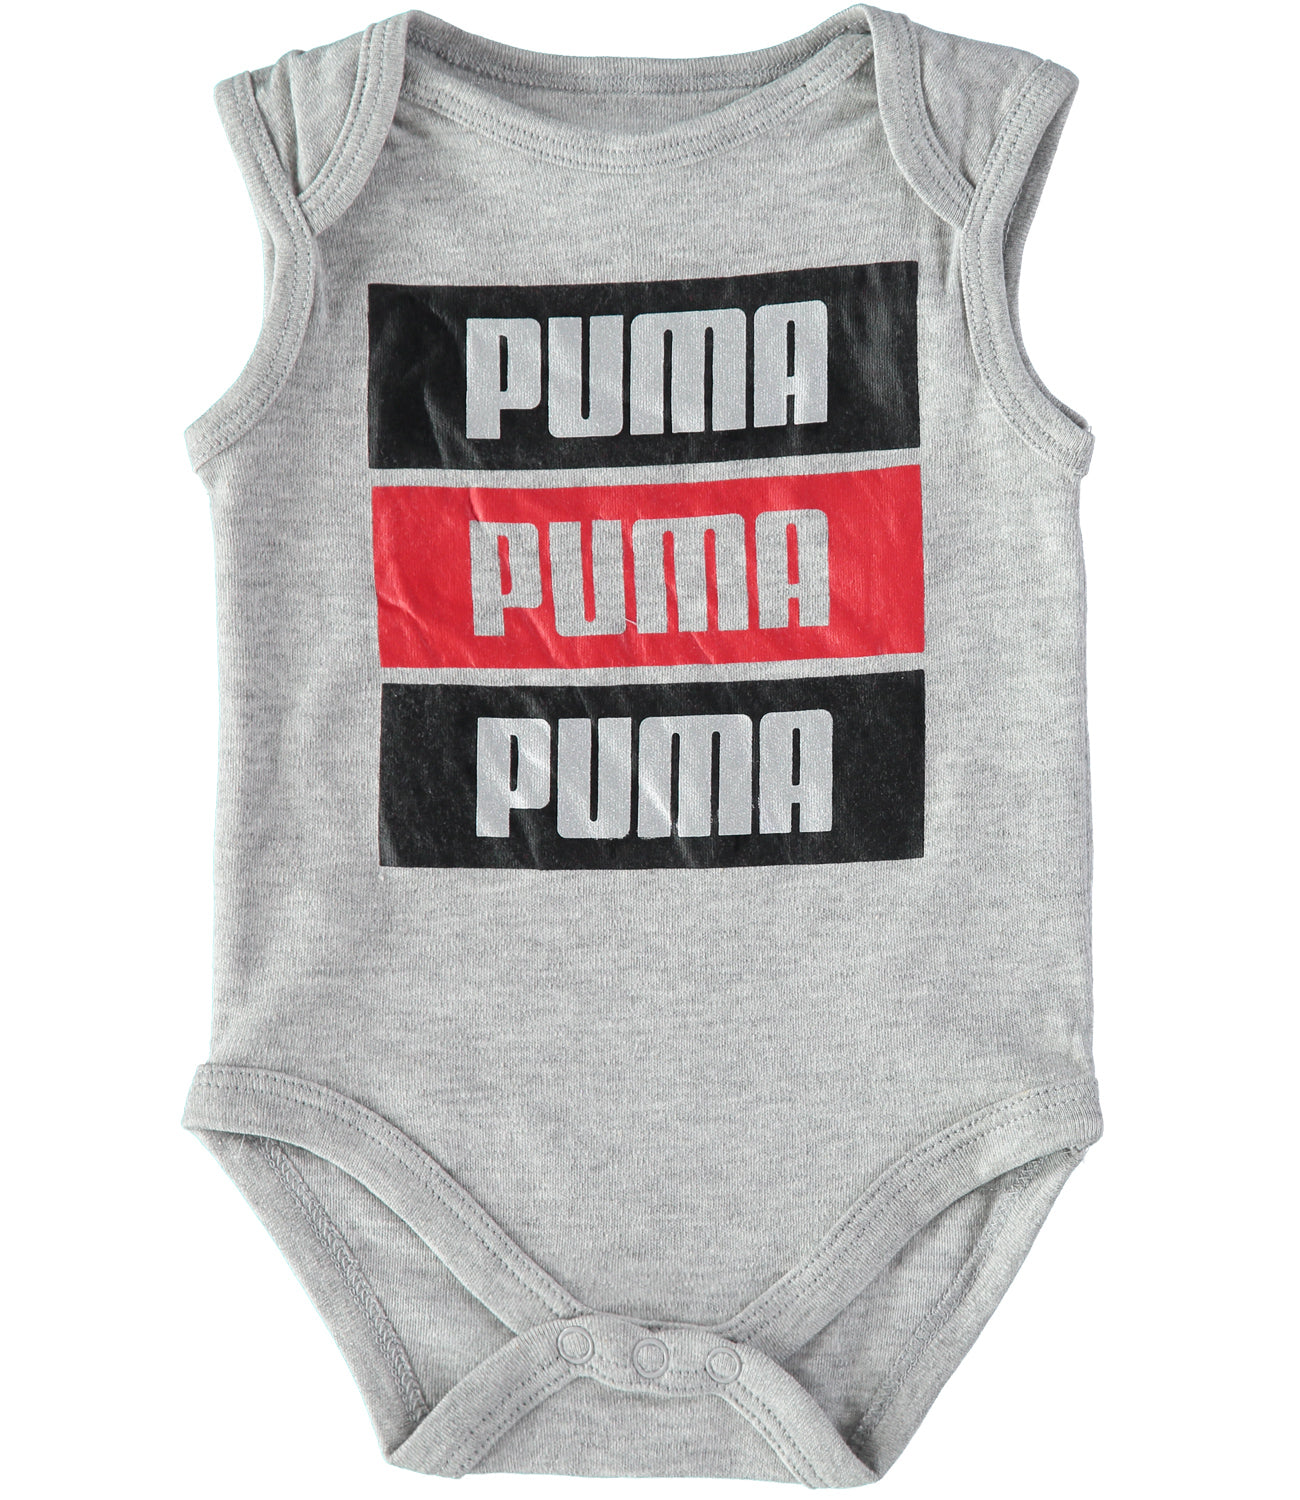 PUMA Boys 0-9 Months 5-Piece Newborn Bodysuit Short Set